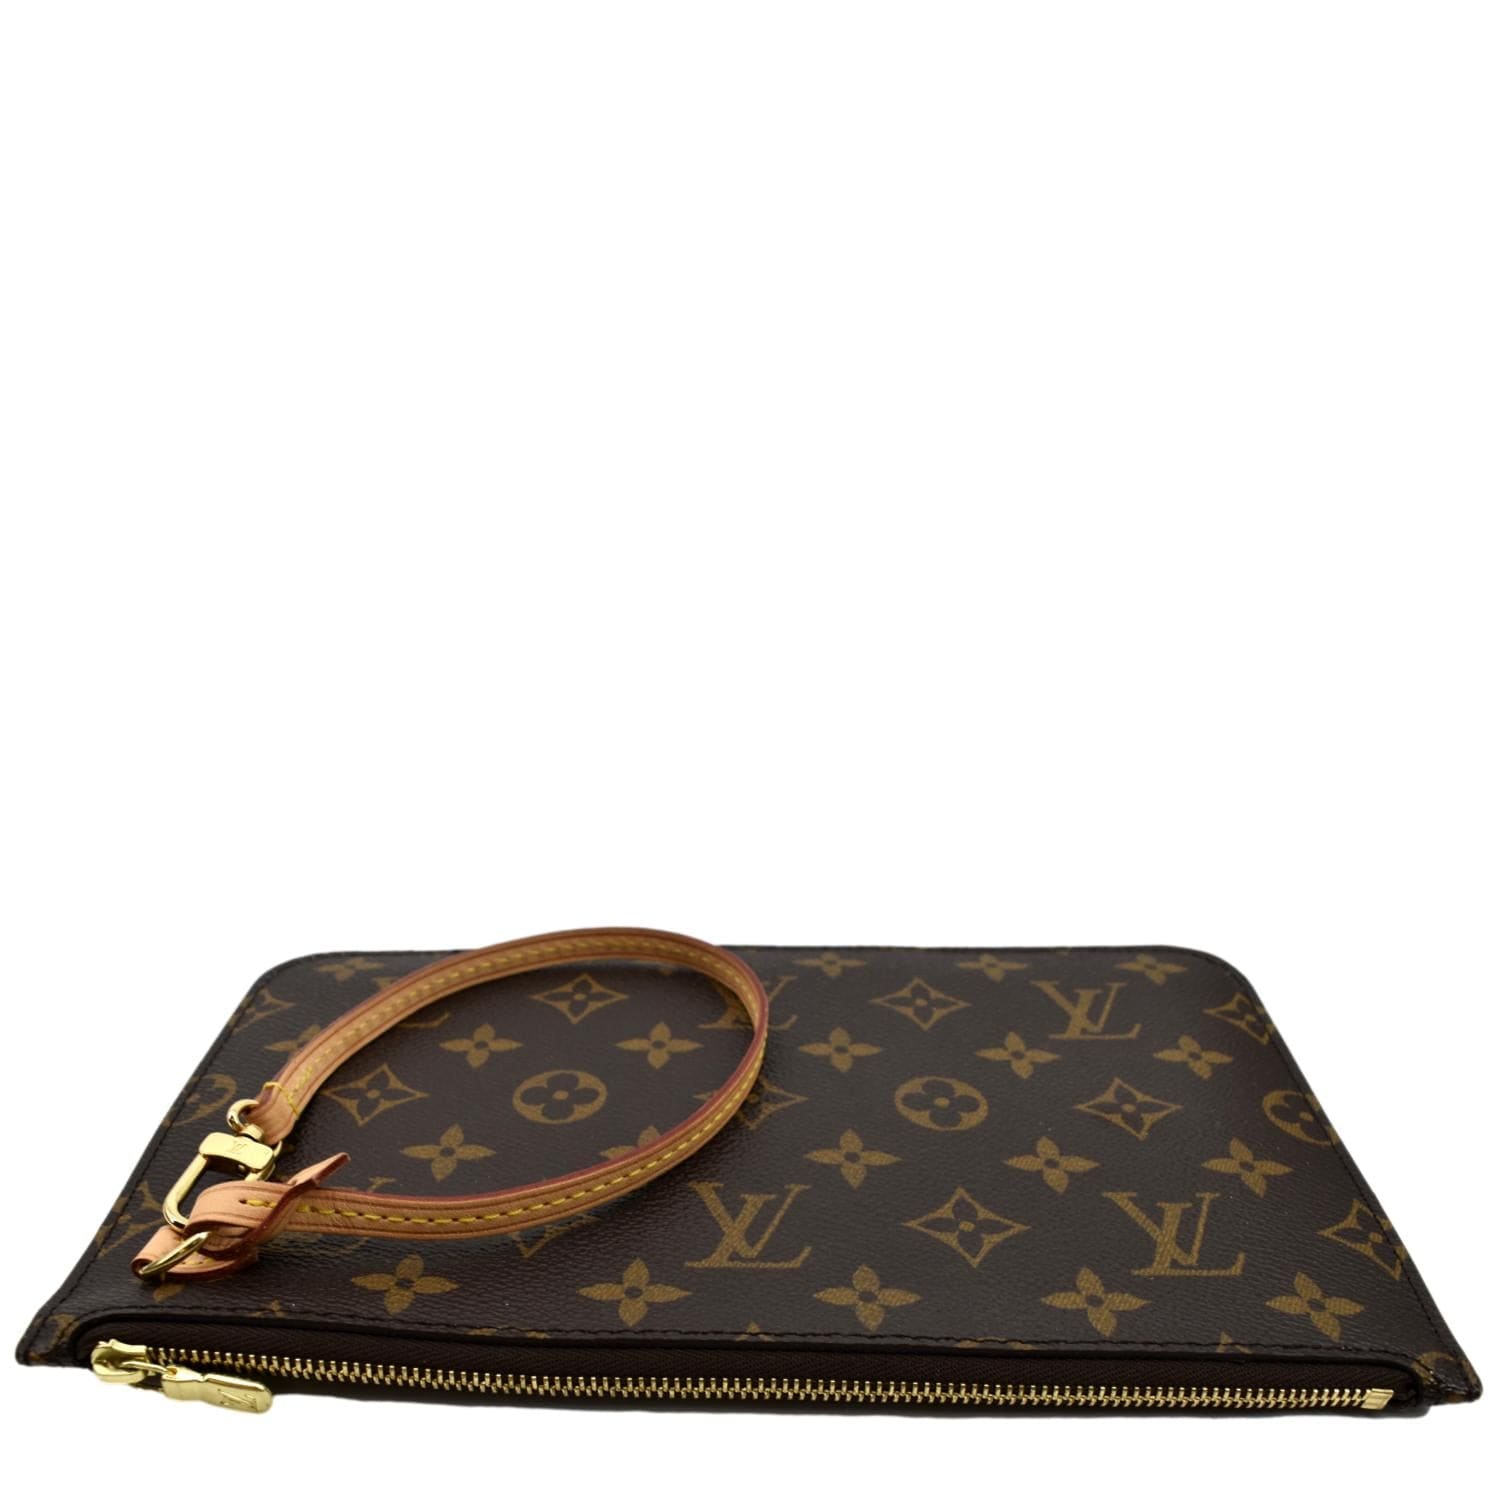 VINTAGE! LOUIS VUITTON Wallet Pochette Wristlet Clutch Monogram Brown Bag